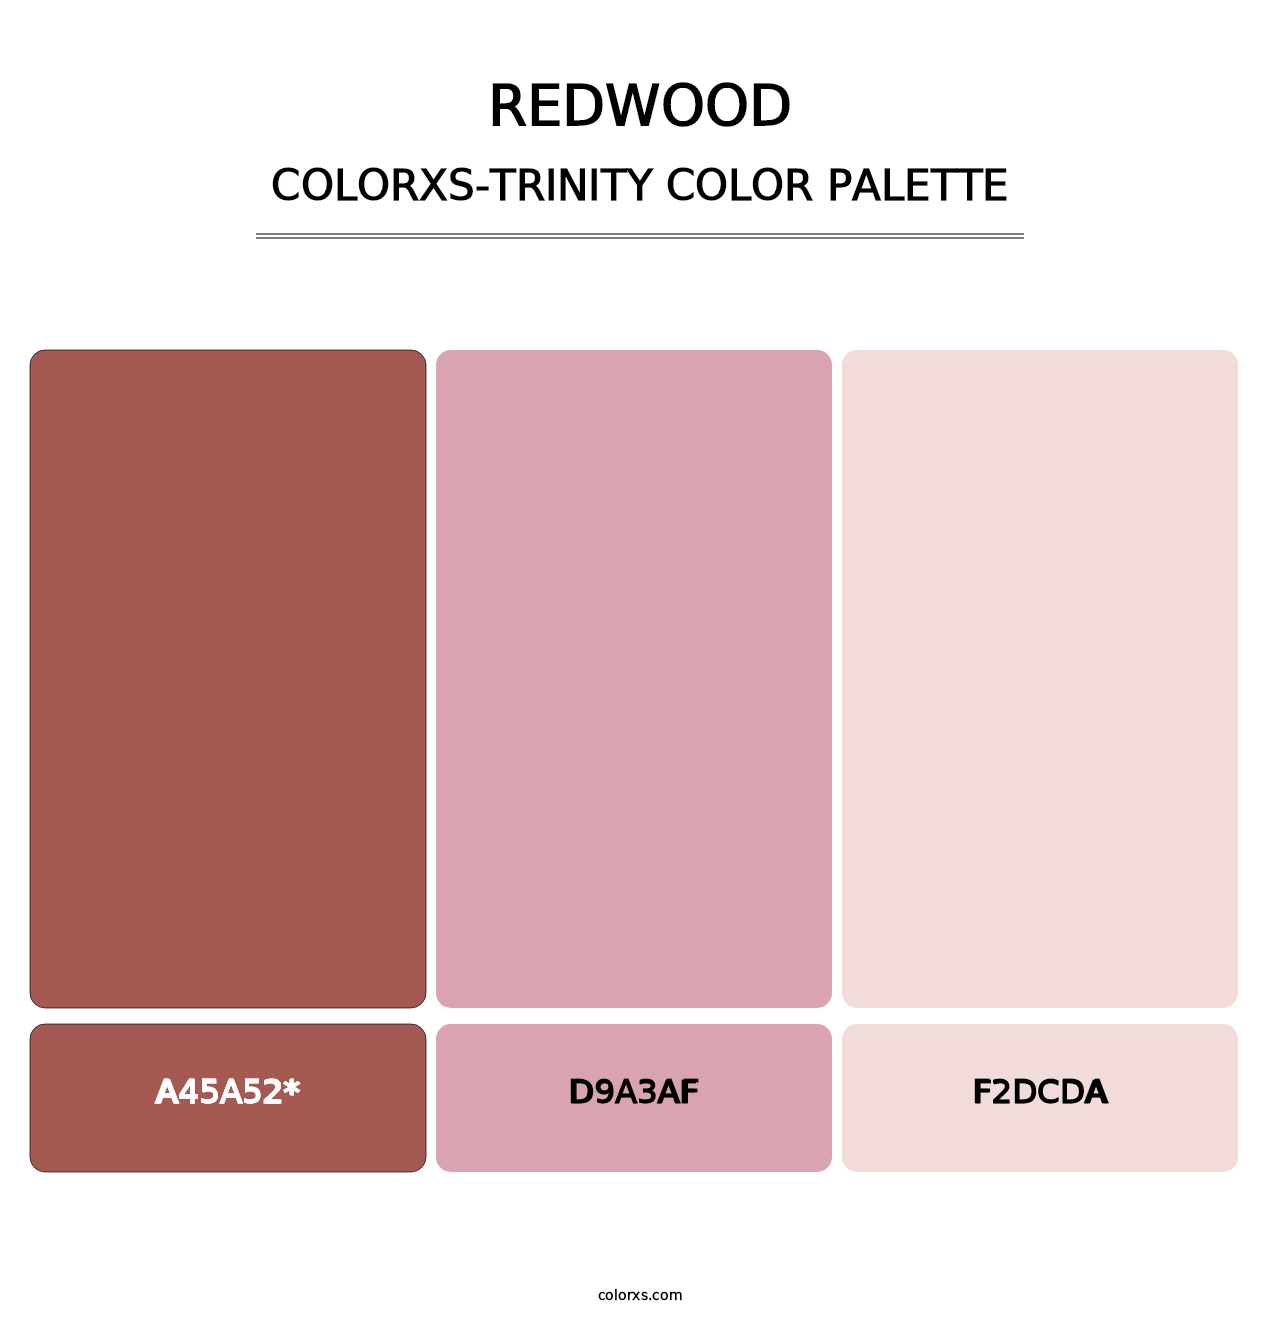 Redwood - Colorxs Trinity Palette